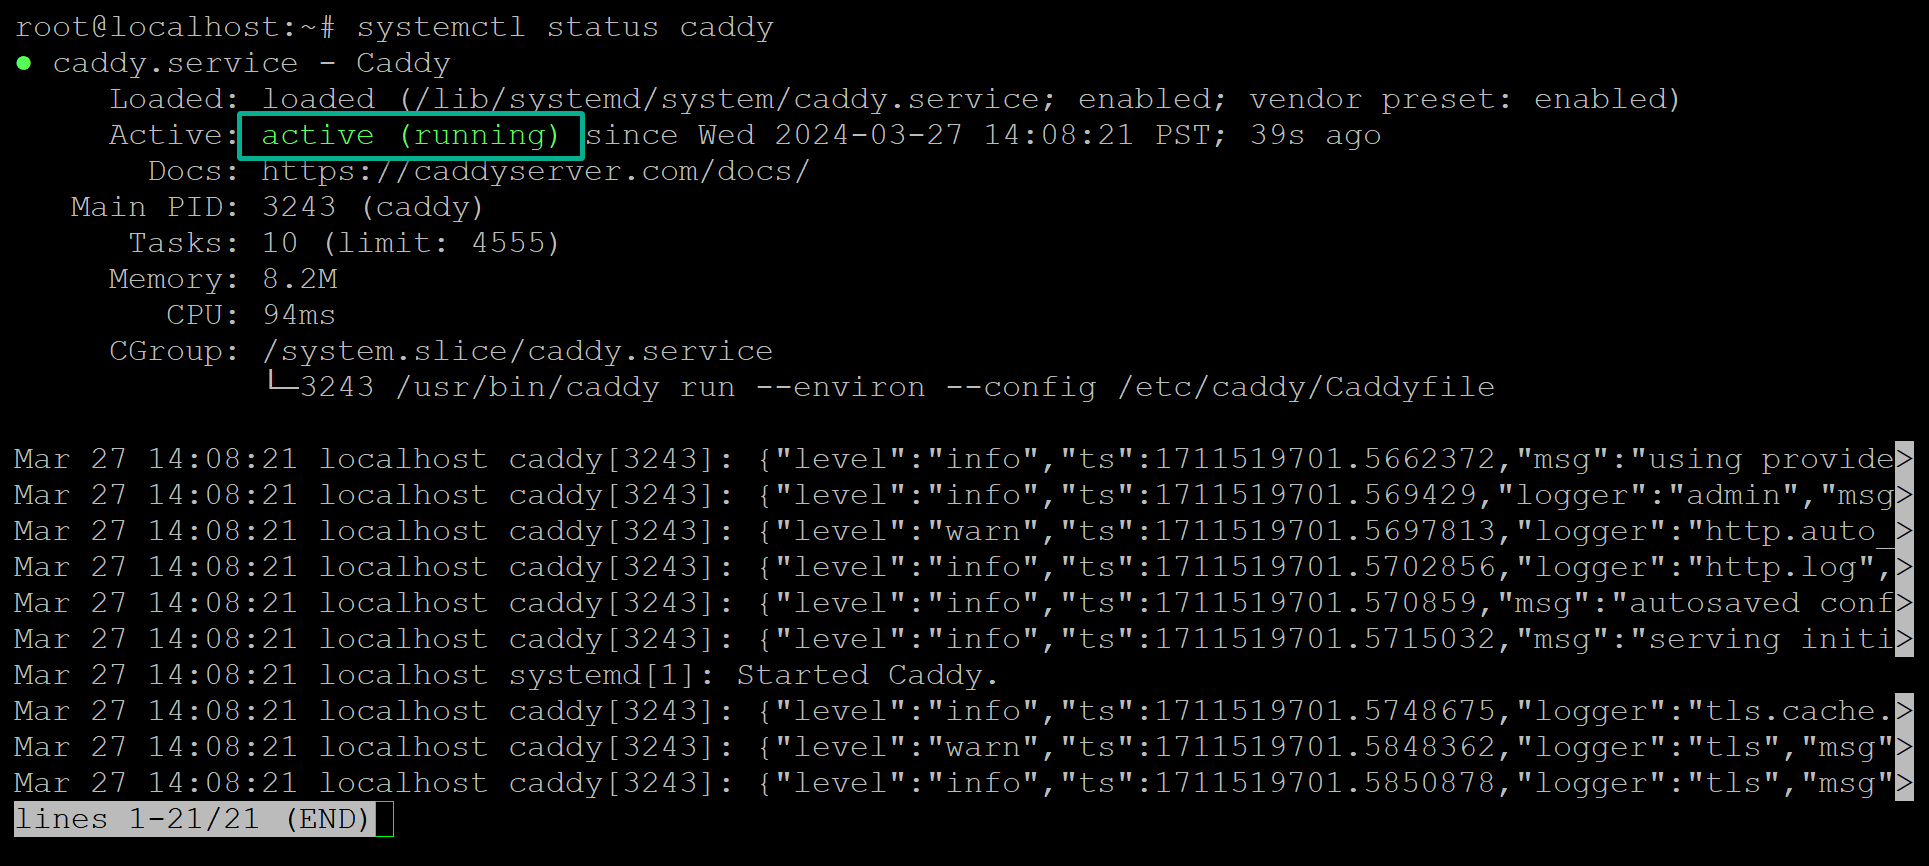 Verifying the Caddy web server status 